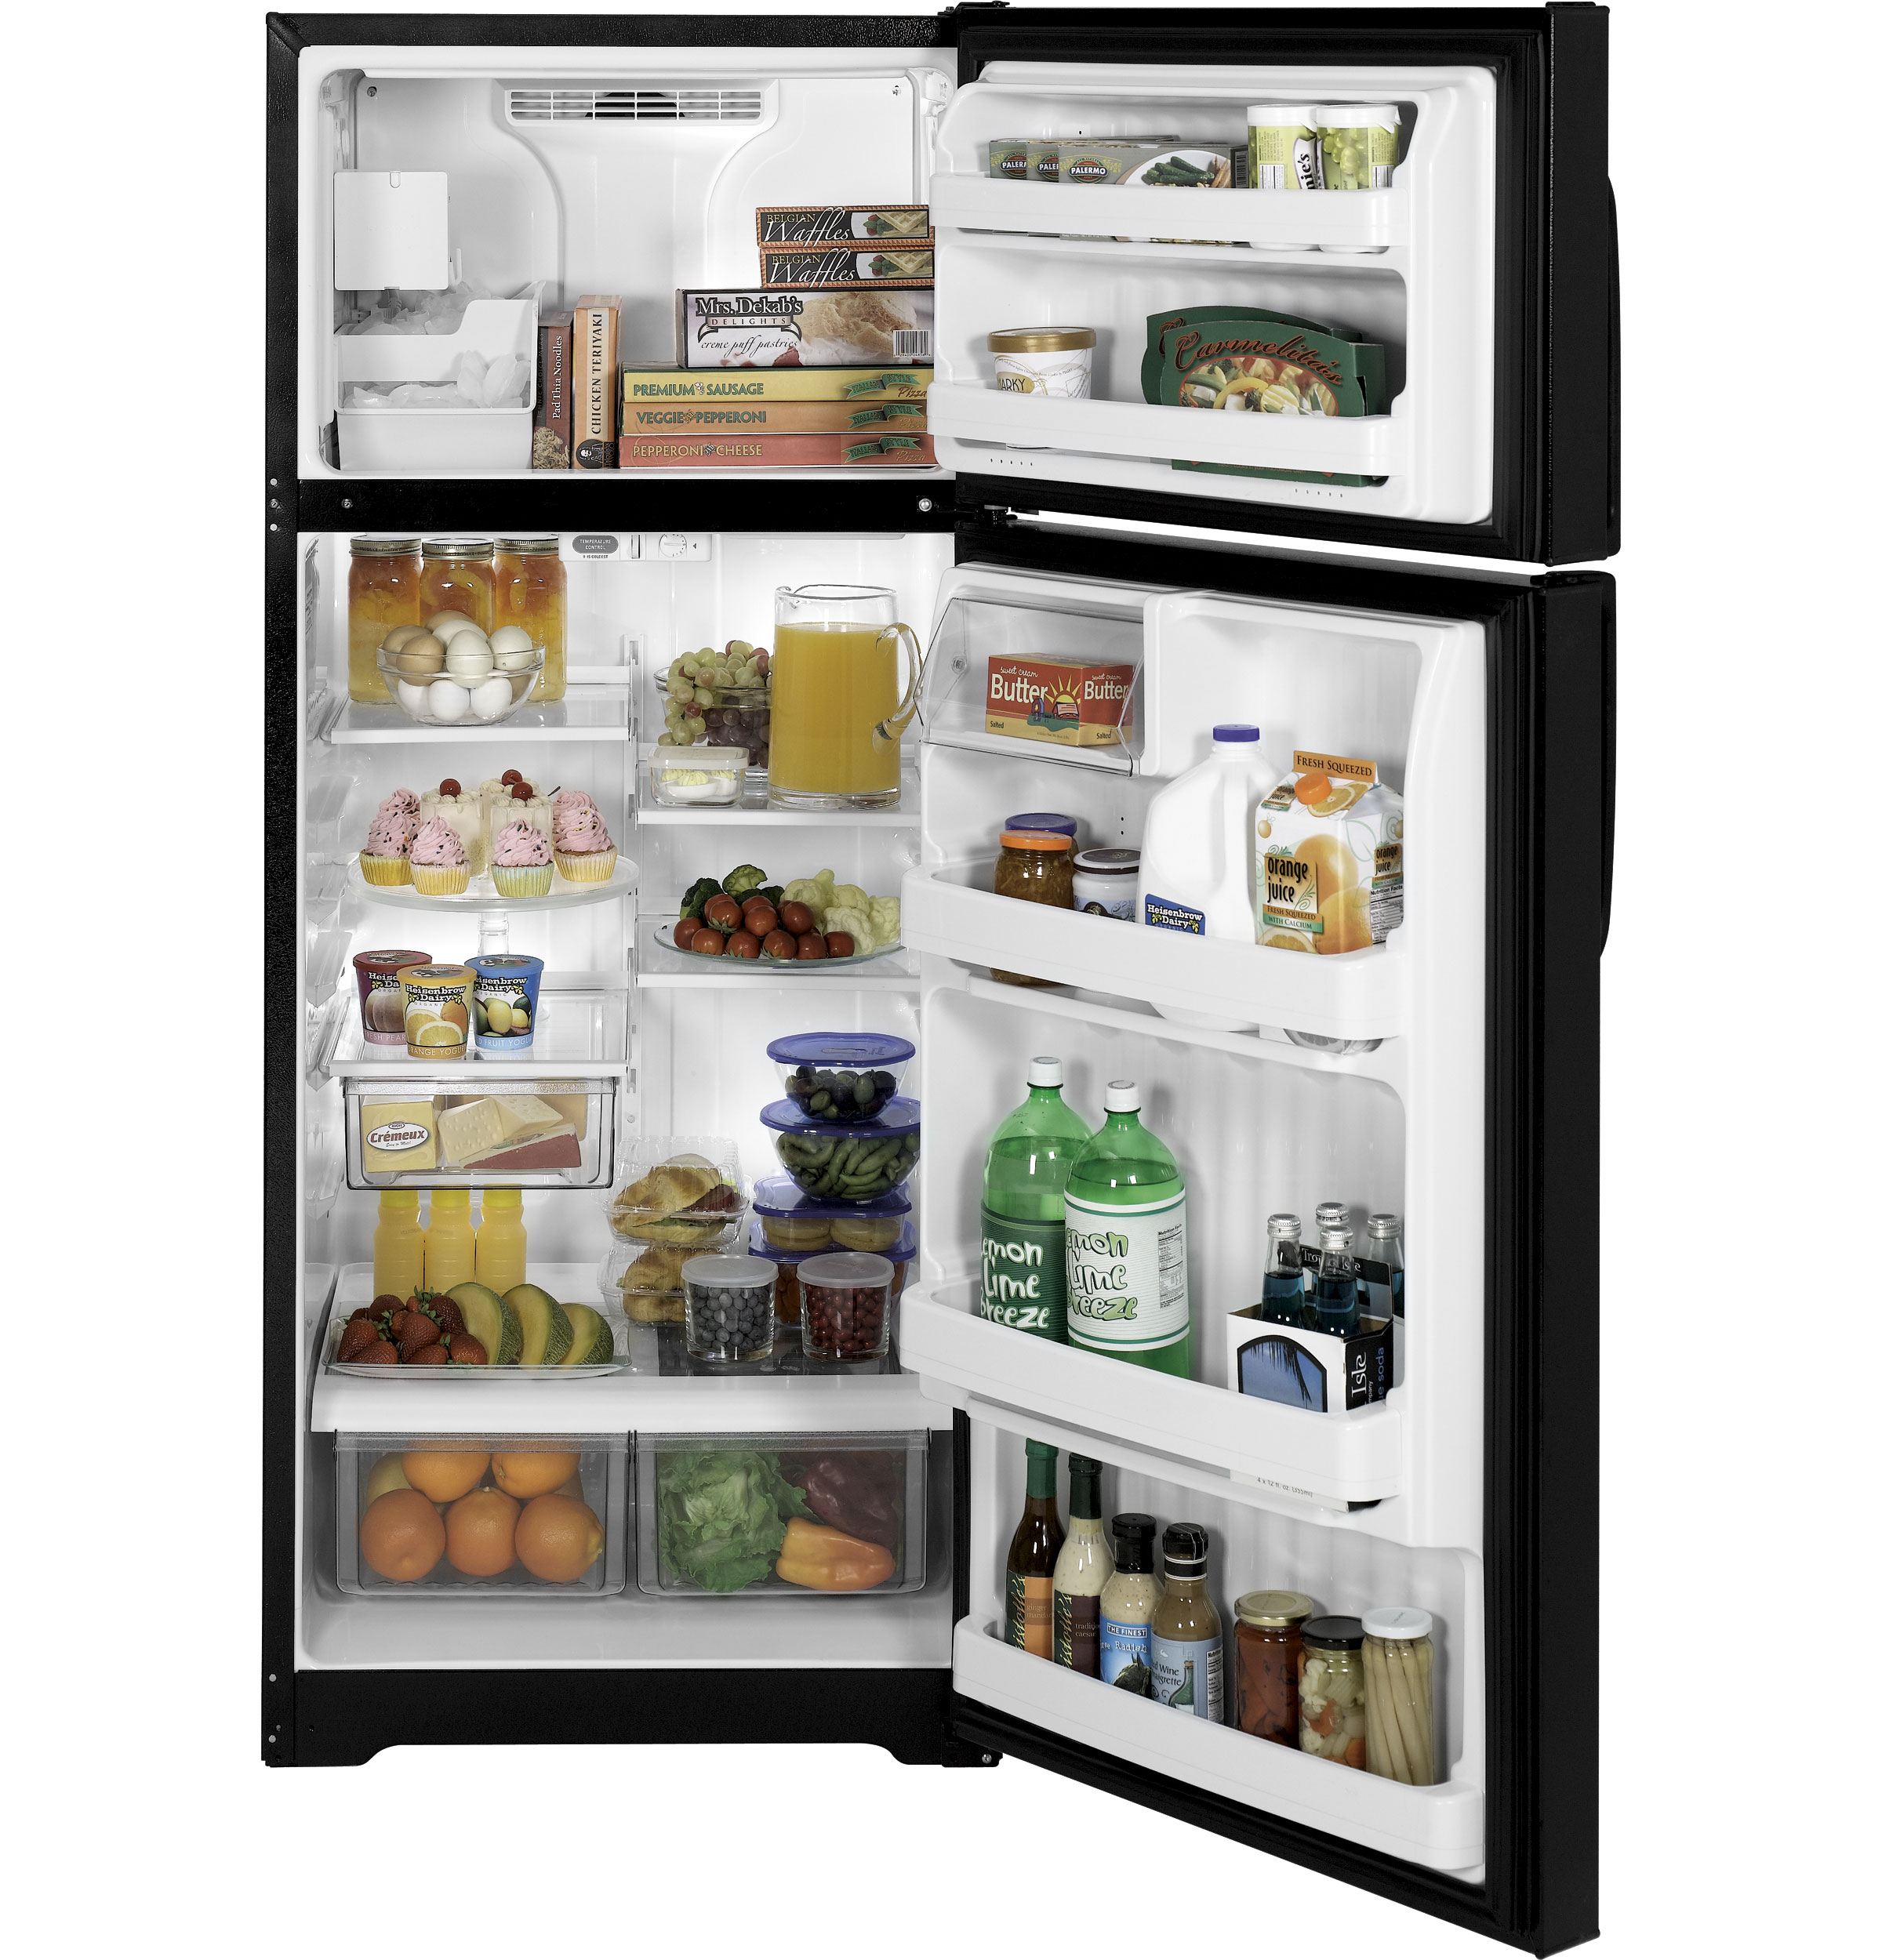 GE® 18.2 Cu. Ft. Top-Freezer Refrigerator